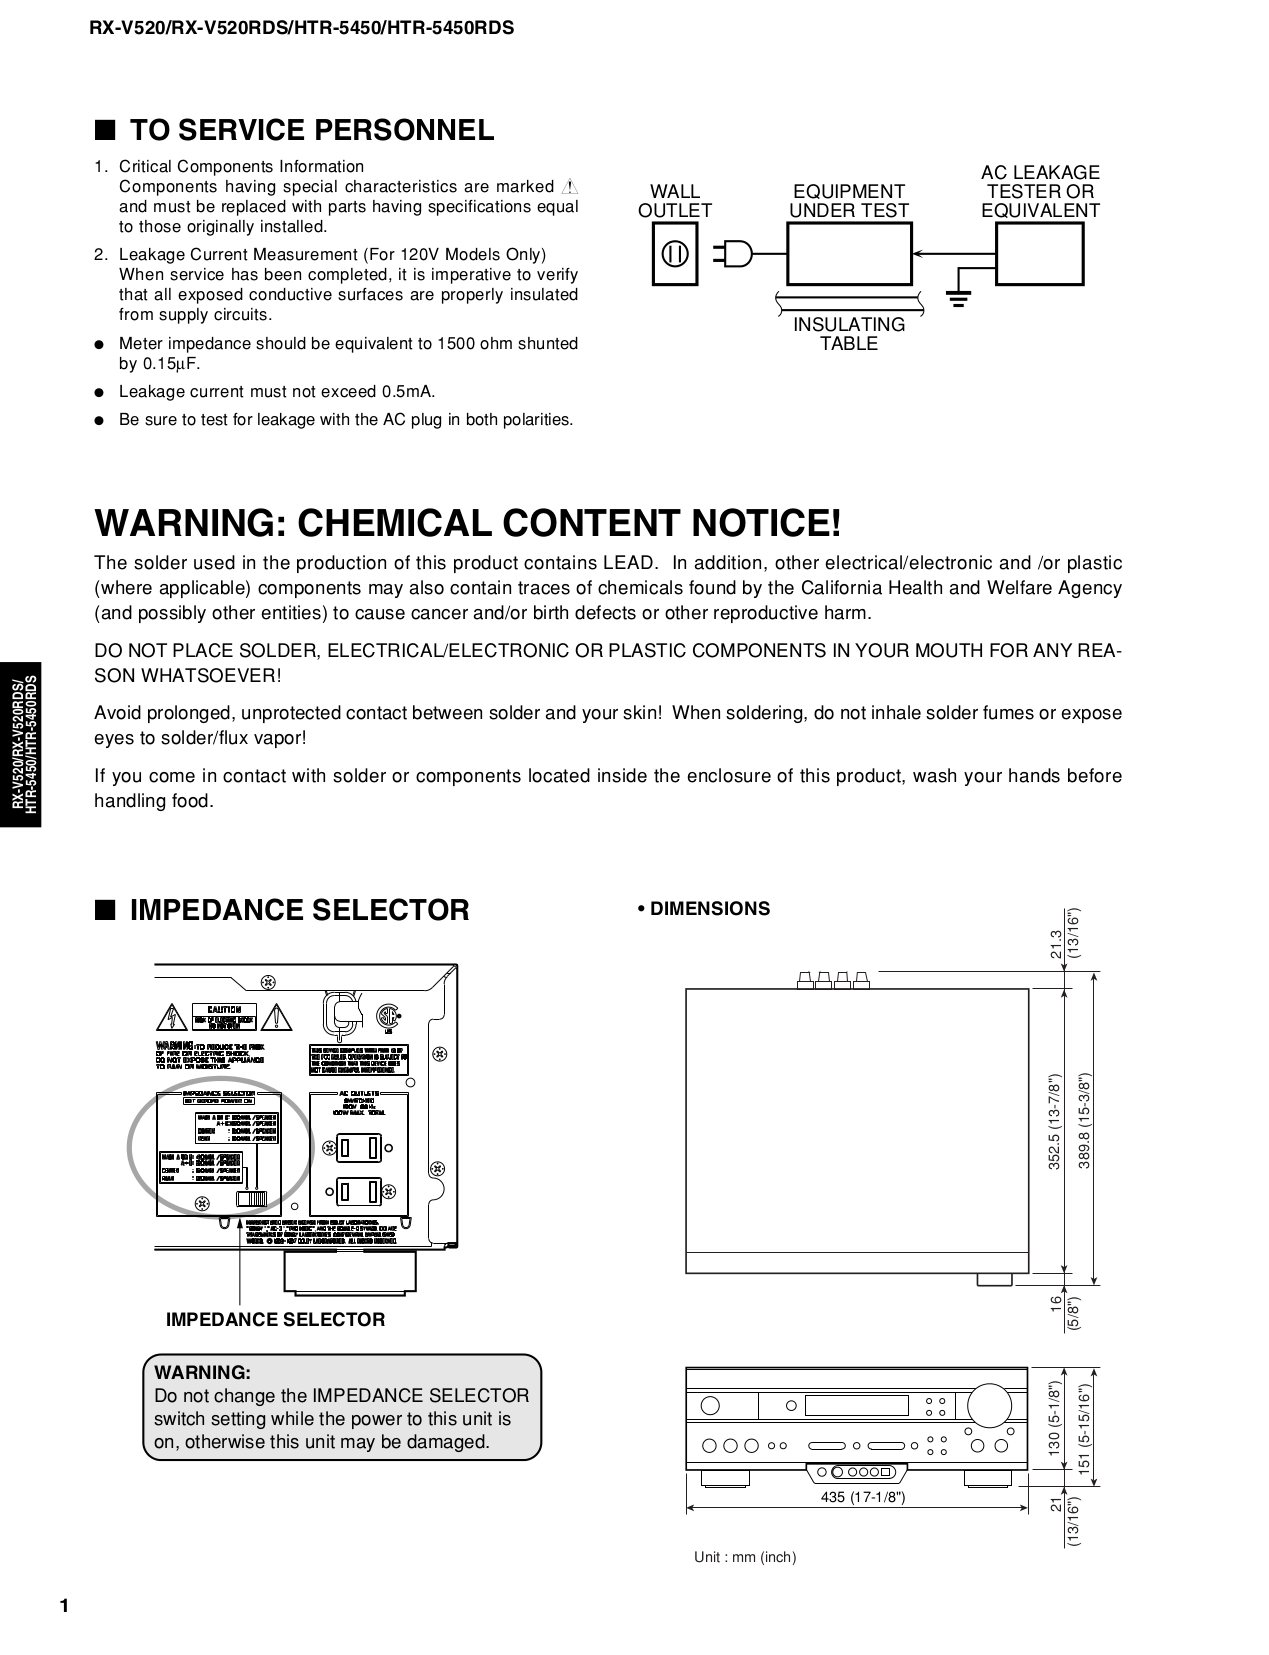 PDF manual for Yamaha Receiver RX-V520